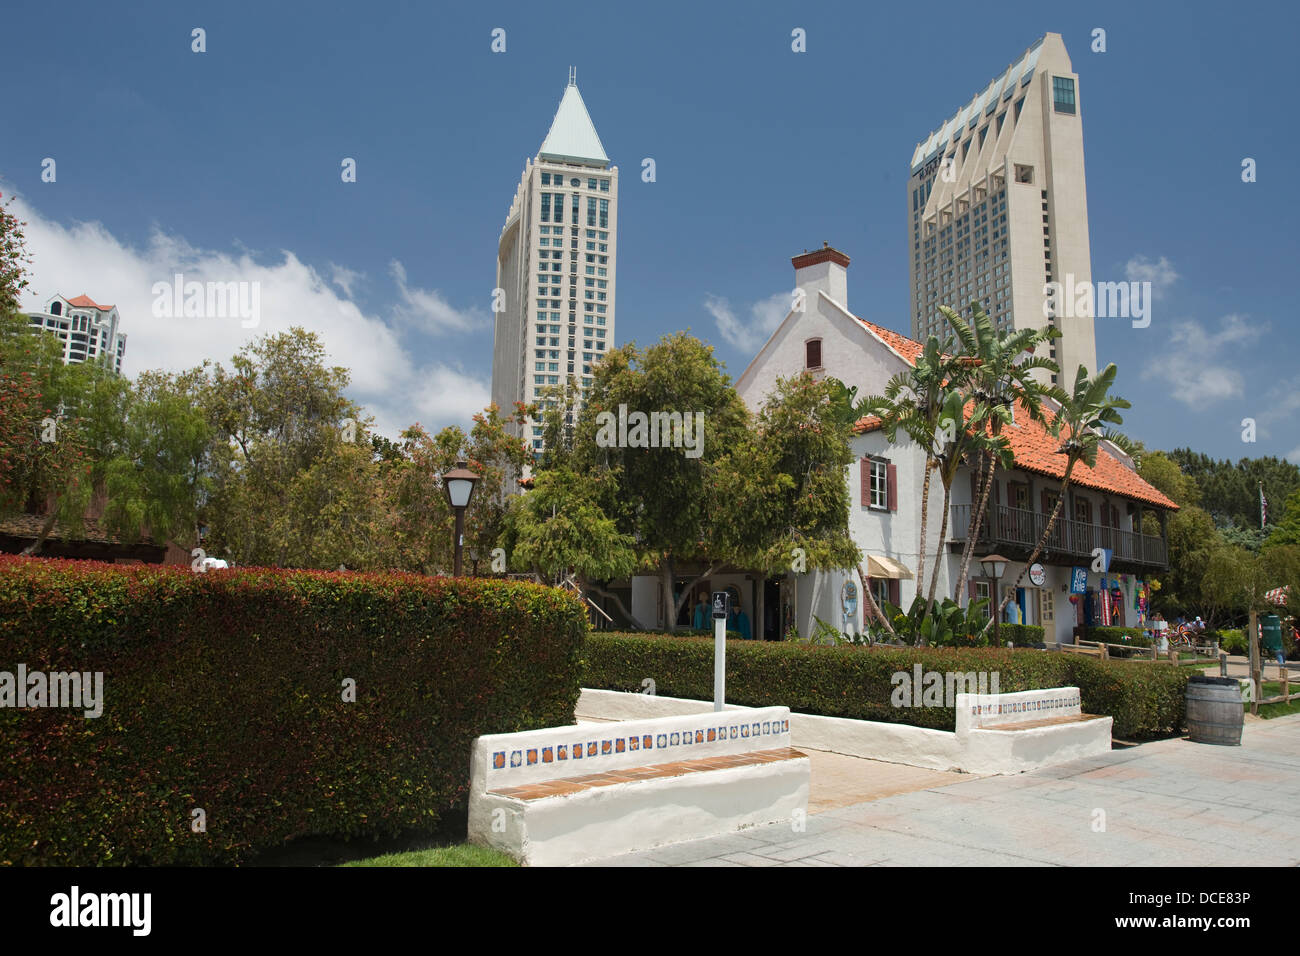 GRAND HYATT HOTEL TOWERS SEAPORT VILLAGE DOWNTOWN SAN DIEGO CALIFORNIA USA Stock Photo